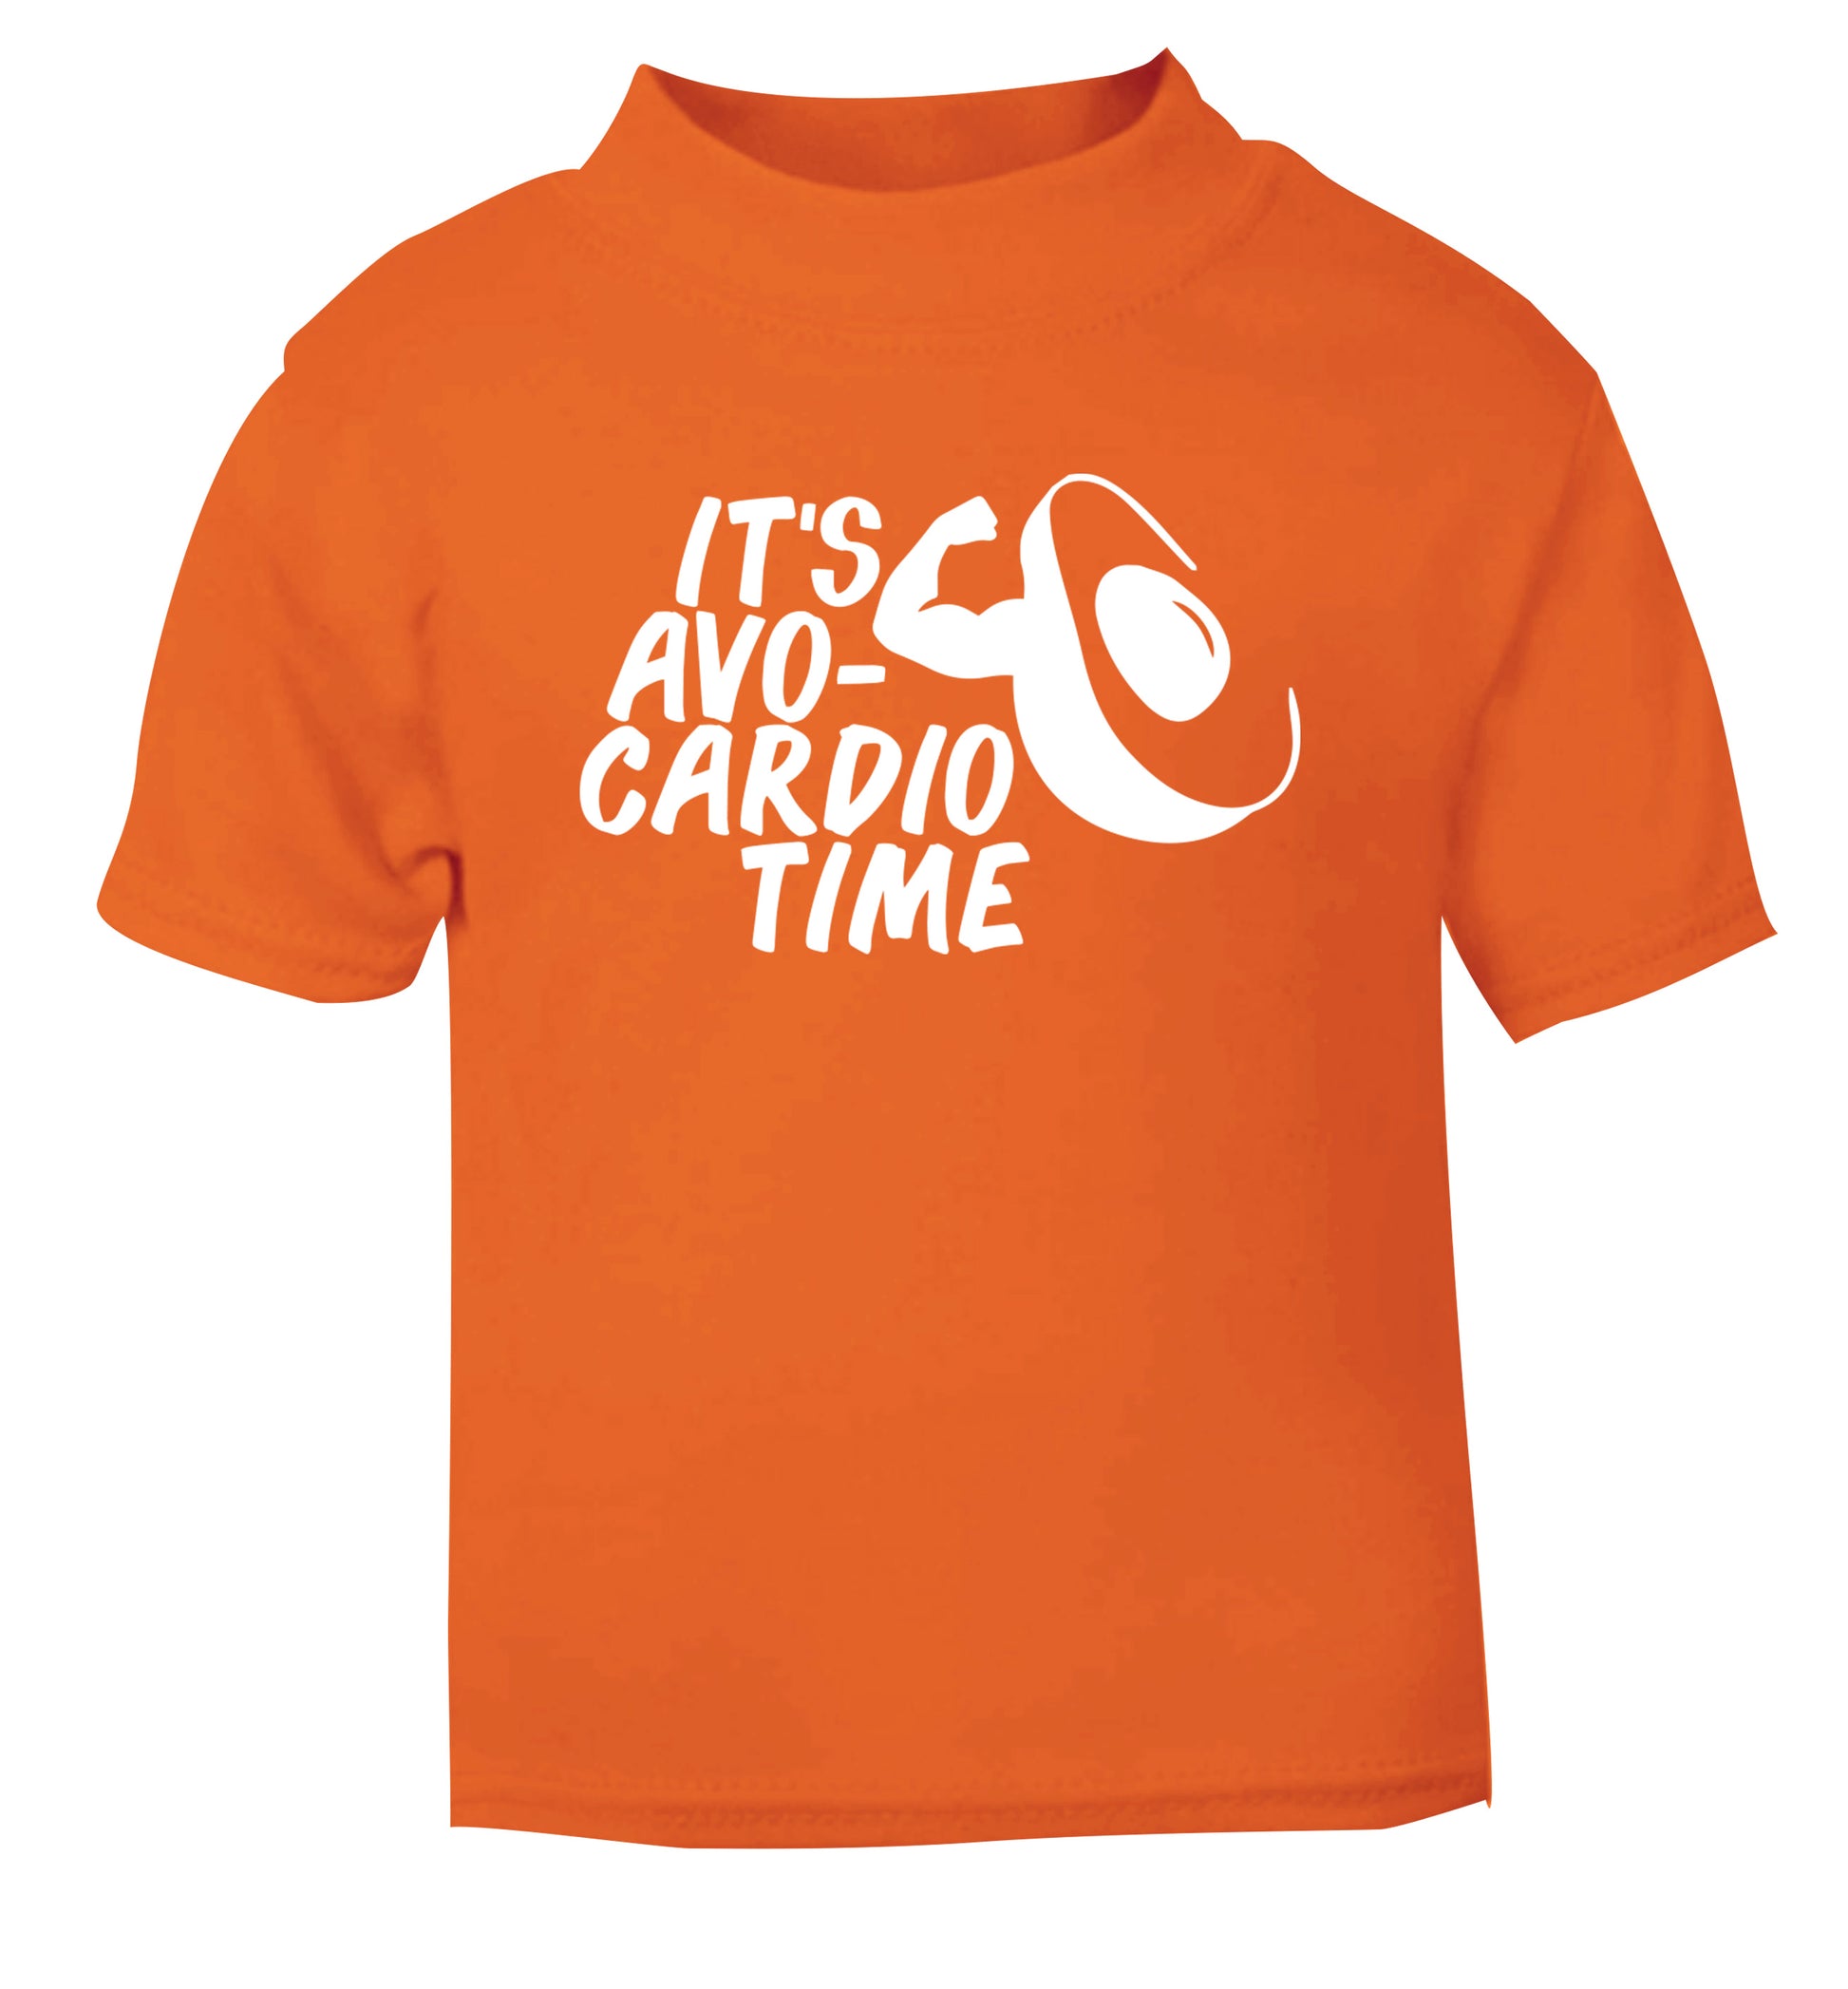 It's avo-cardio time orange Baby Toddler Tshirt 2 Years